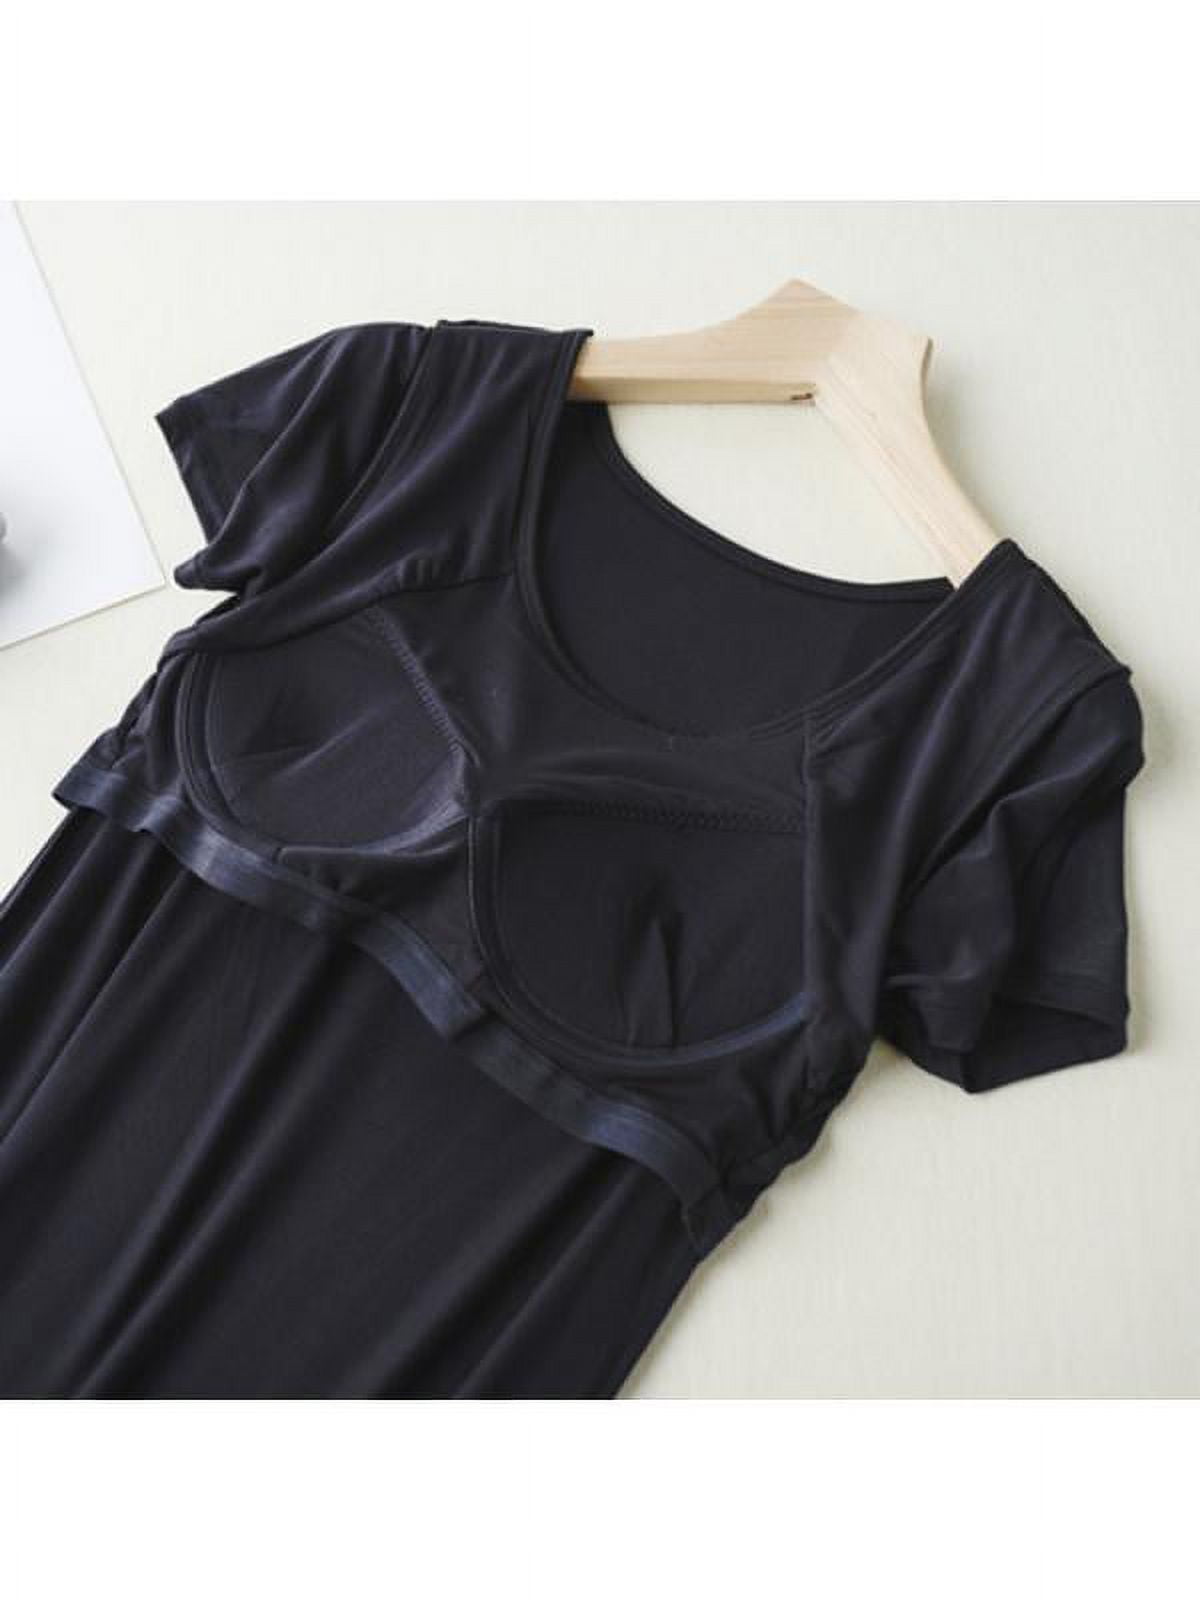 Freedom Knitwear Built-In Bra Shirt - Black in Freedom StayFresh Travel  Loungewear, Pajamas for Women